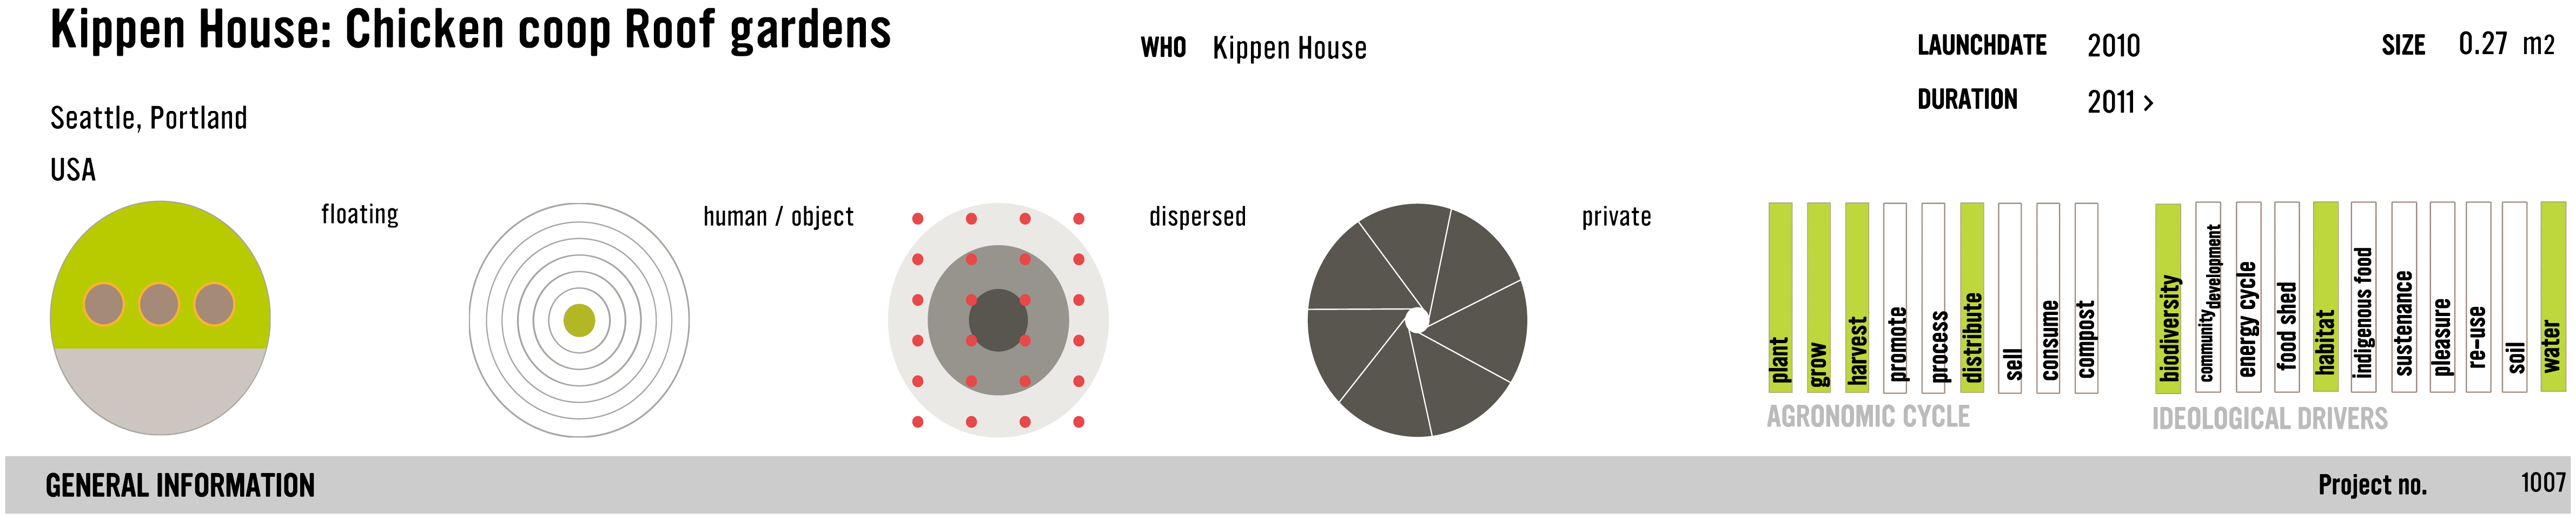 Kippen House Chicken house and roof garden | foodurbanism.org